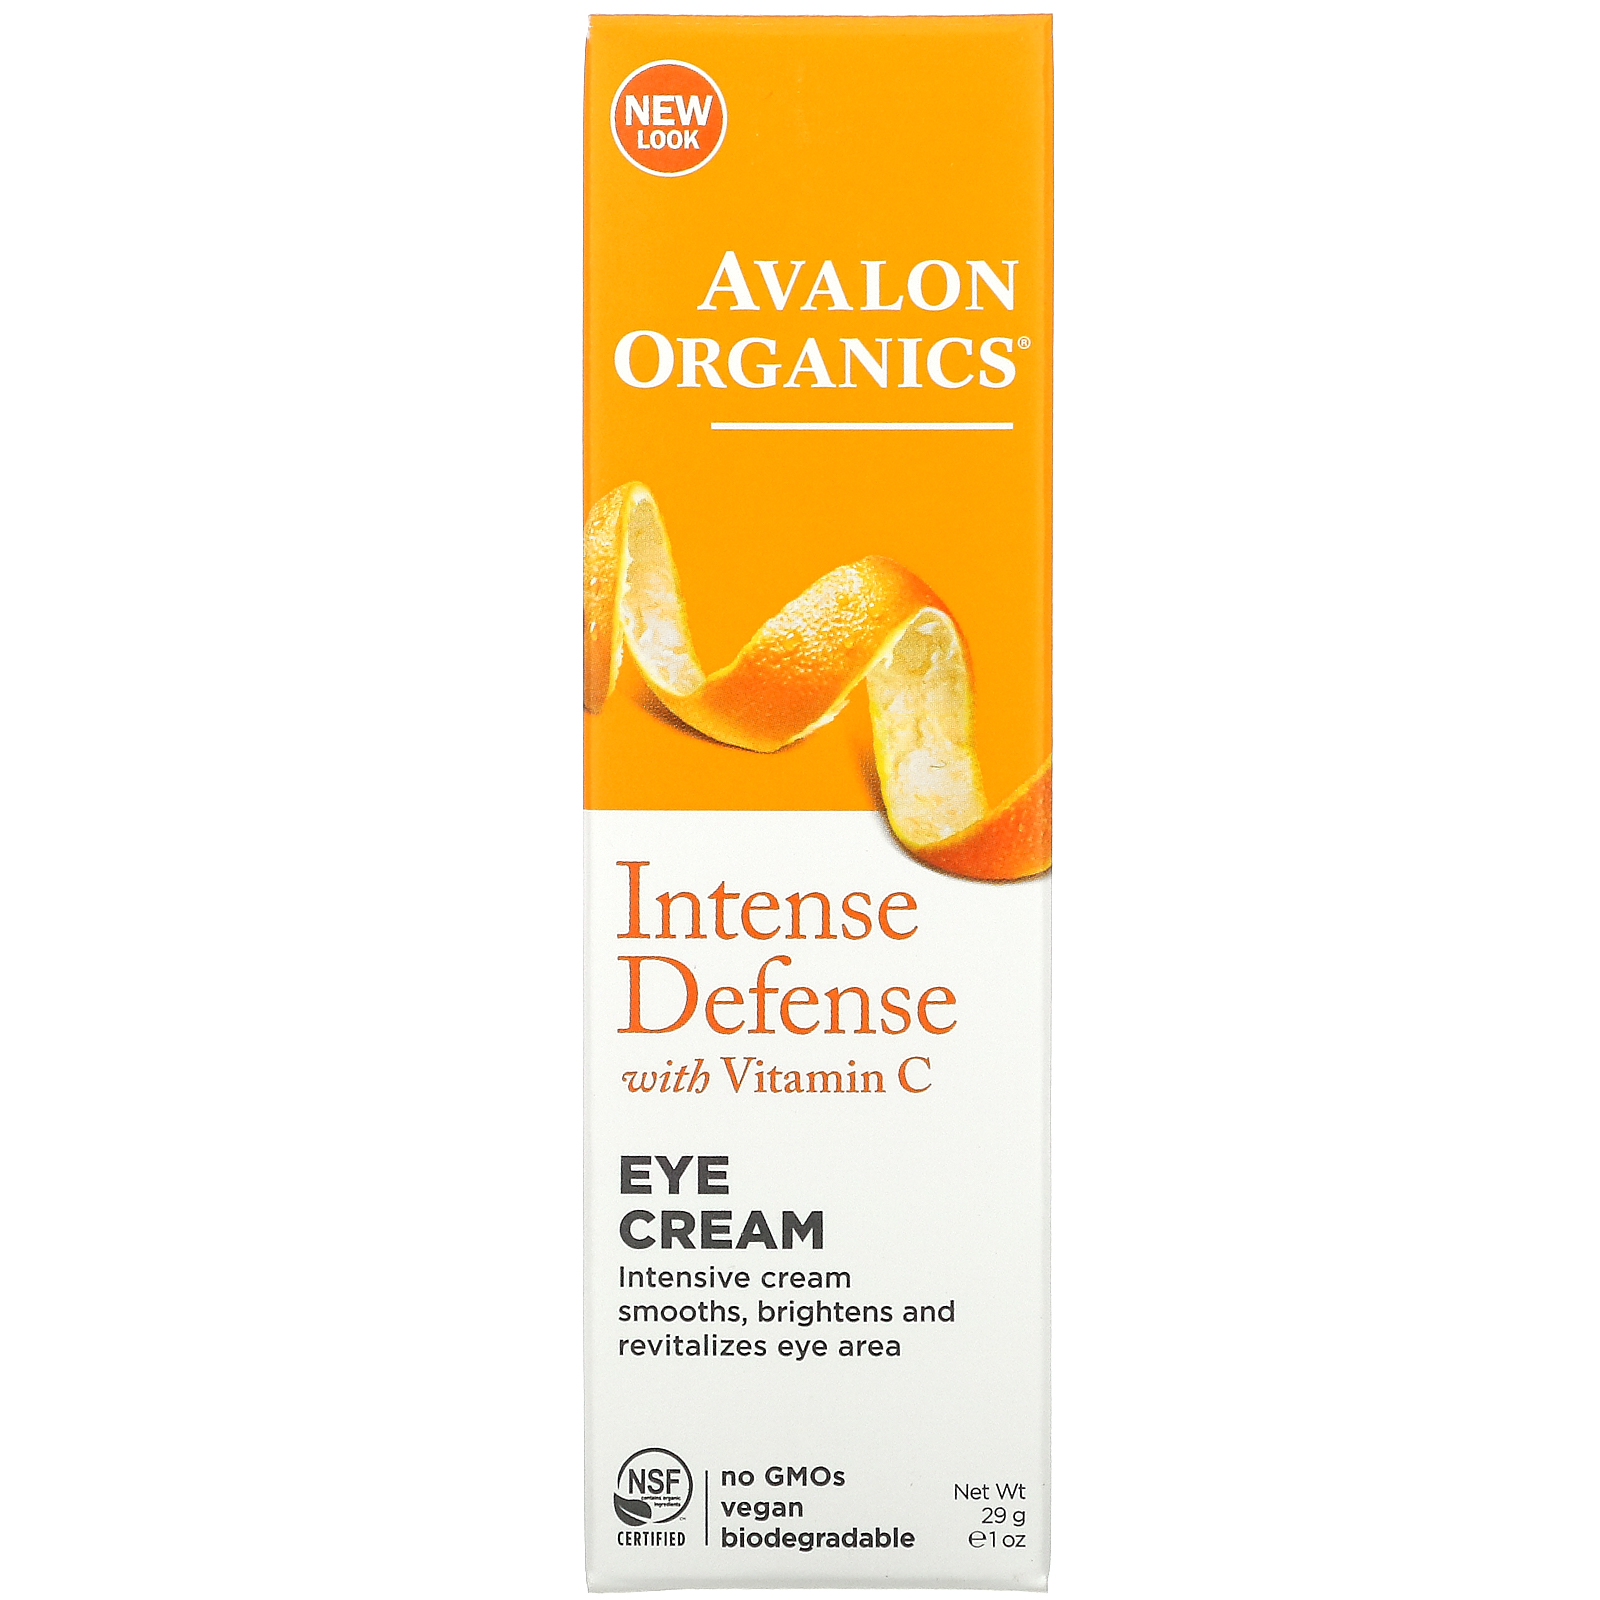 Avalon organics intense defense with vitamin c eye cream reviews Avalon Organics Eye Cream Intense Defense With Vitamin C 1 Oz 29 G Iherb